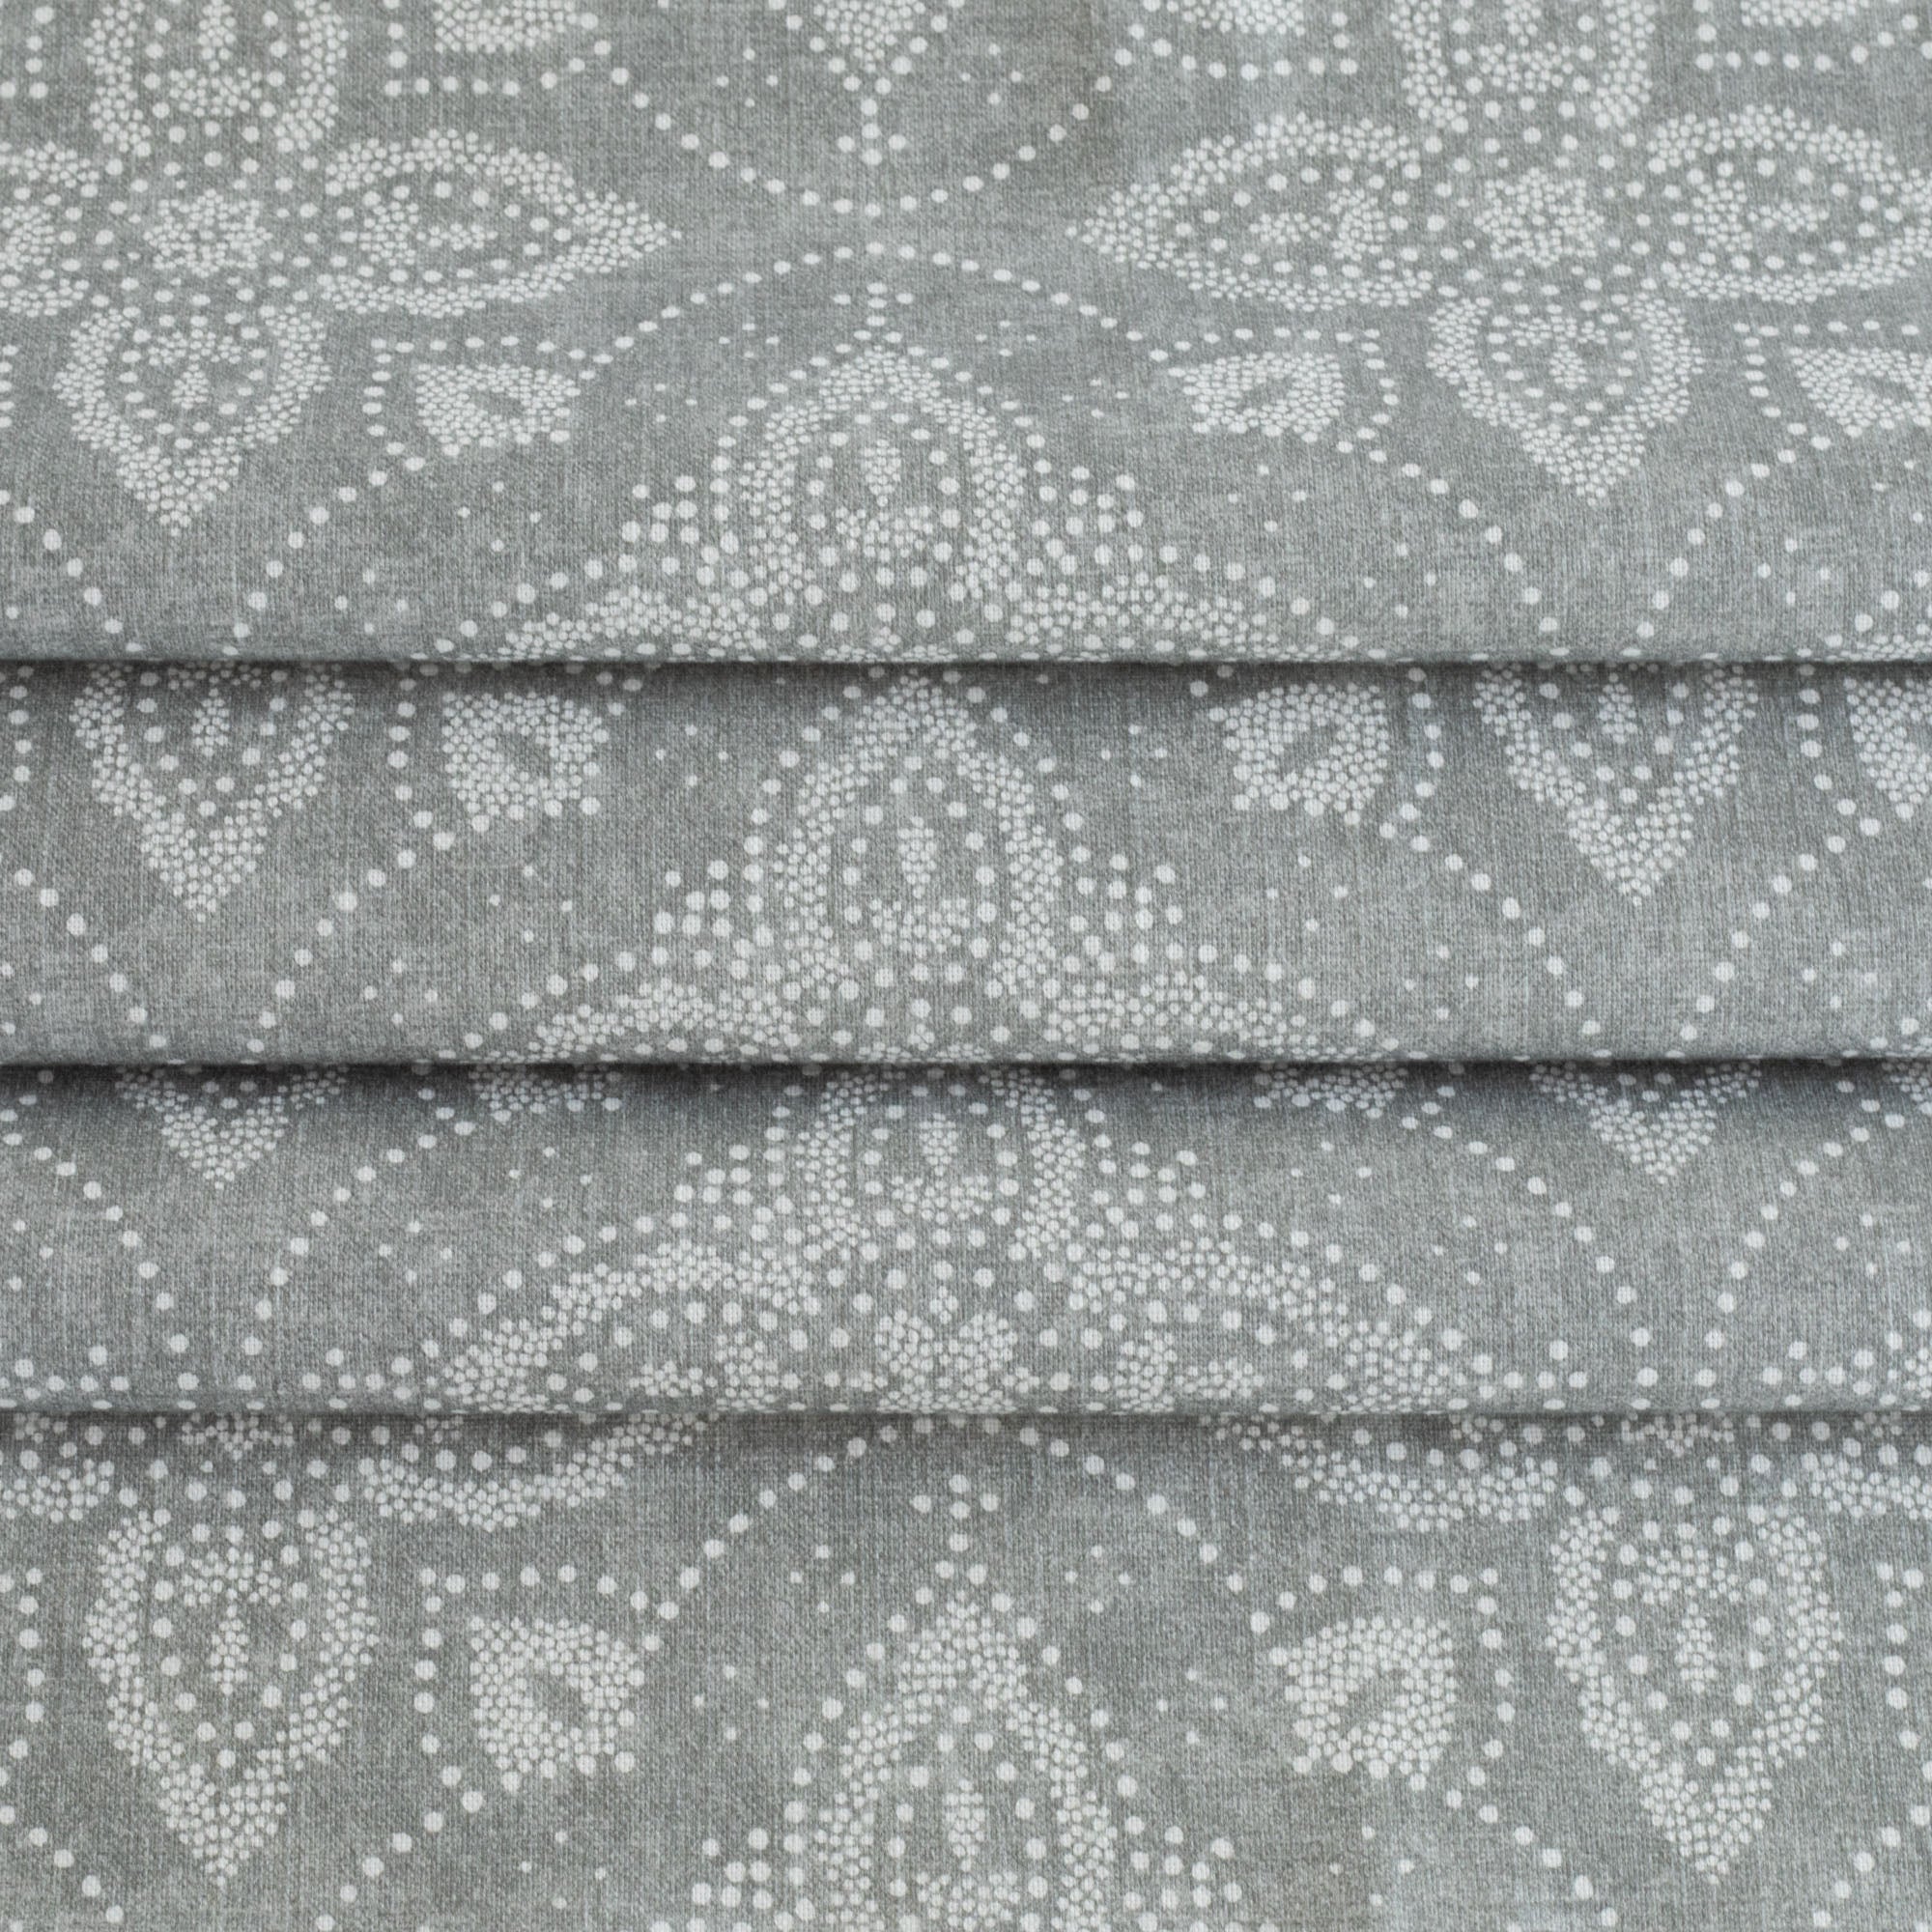 Dixie Sea Glass gray floral dot medallion print home decor fabric